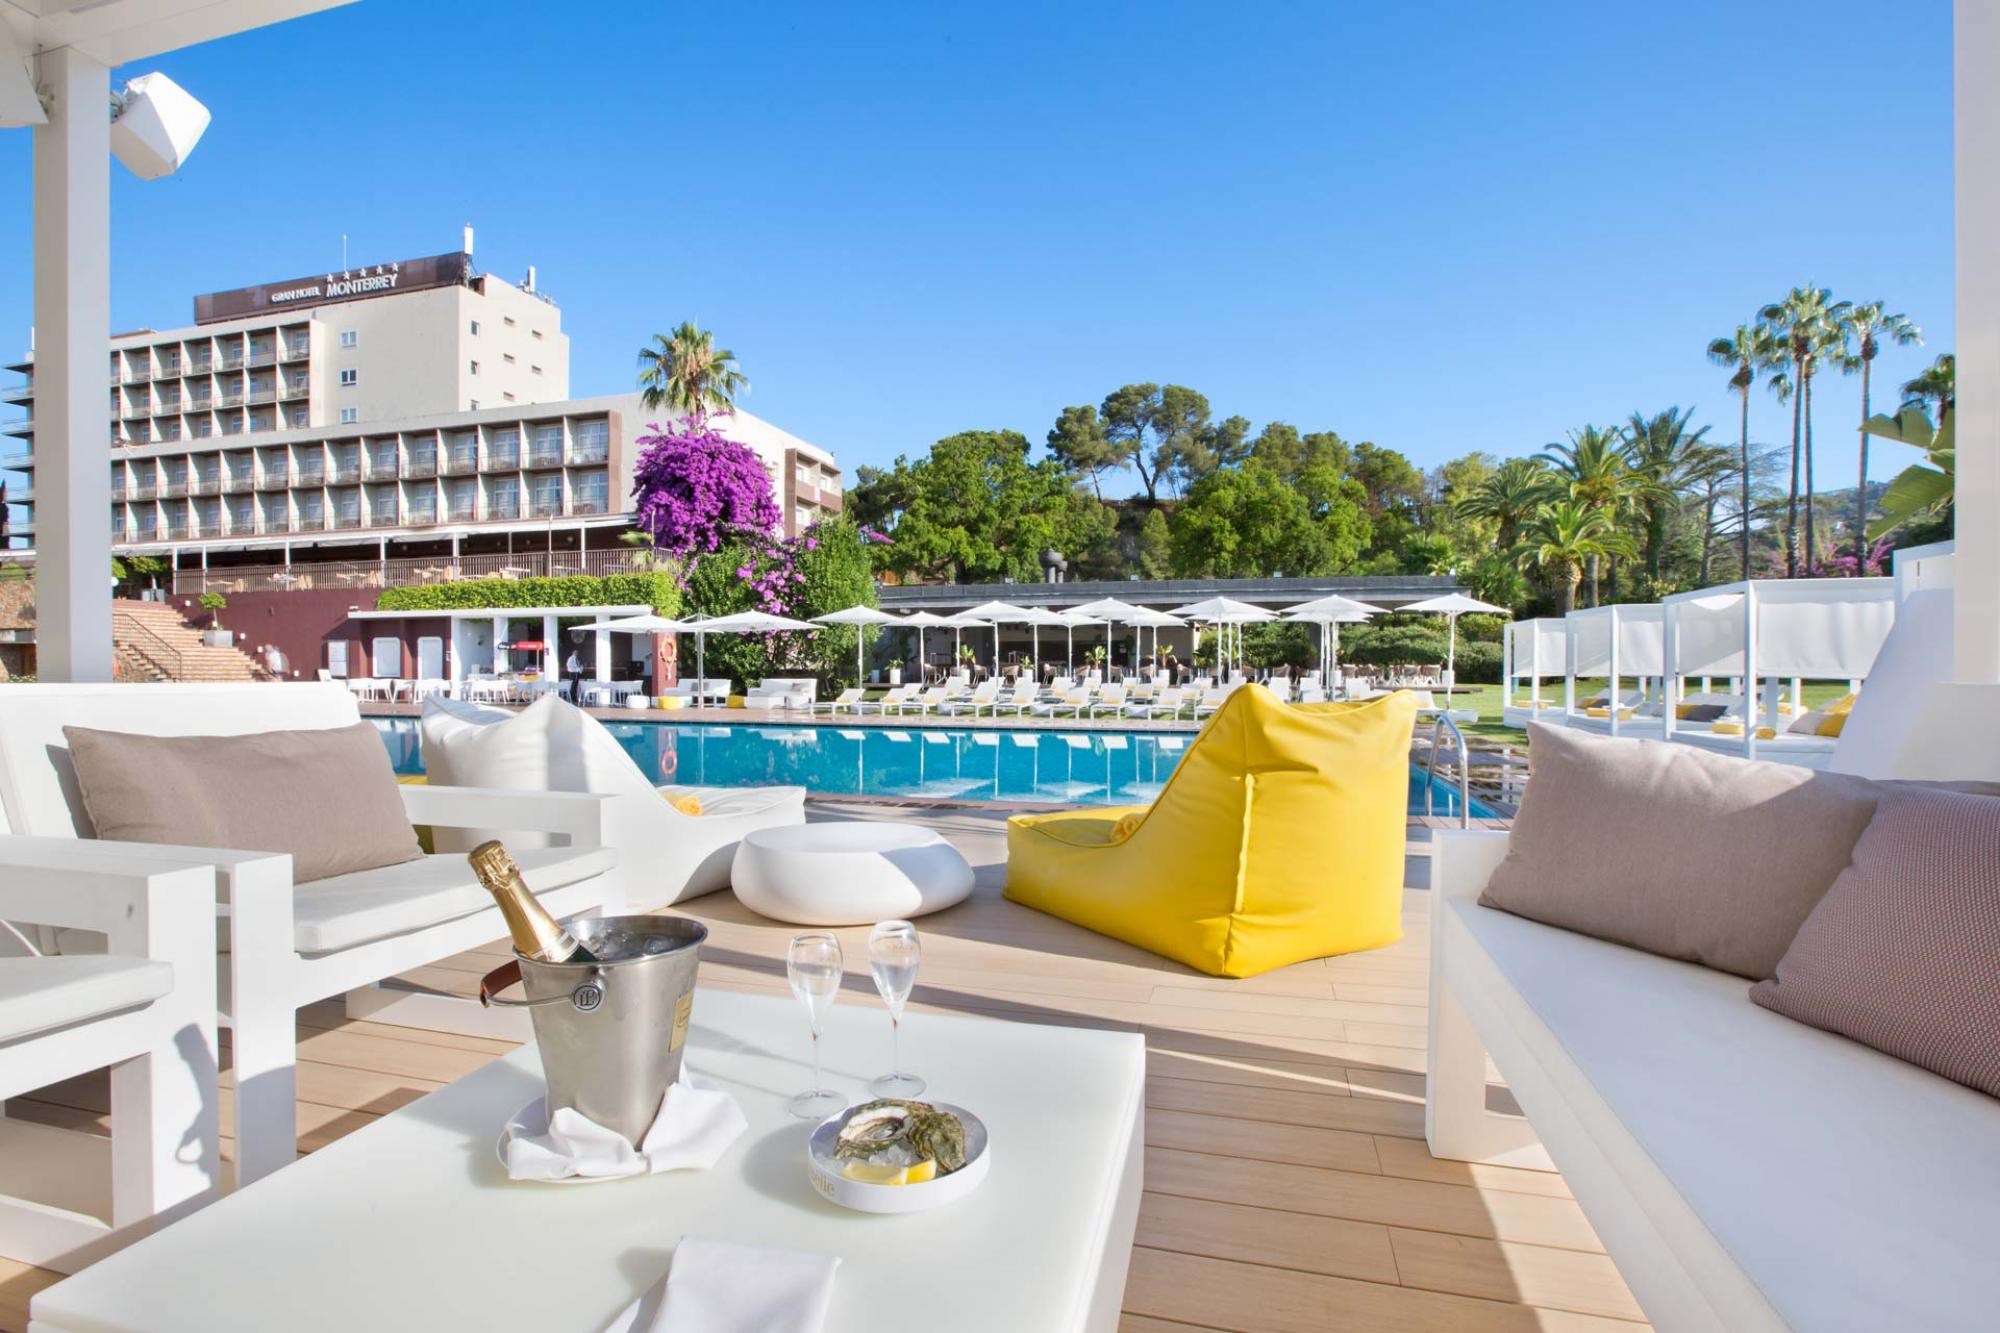 The Gran Hotel Monterrey's picturesque outdoor pool in spectacular Costa Brava.